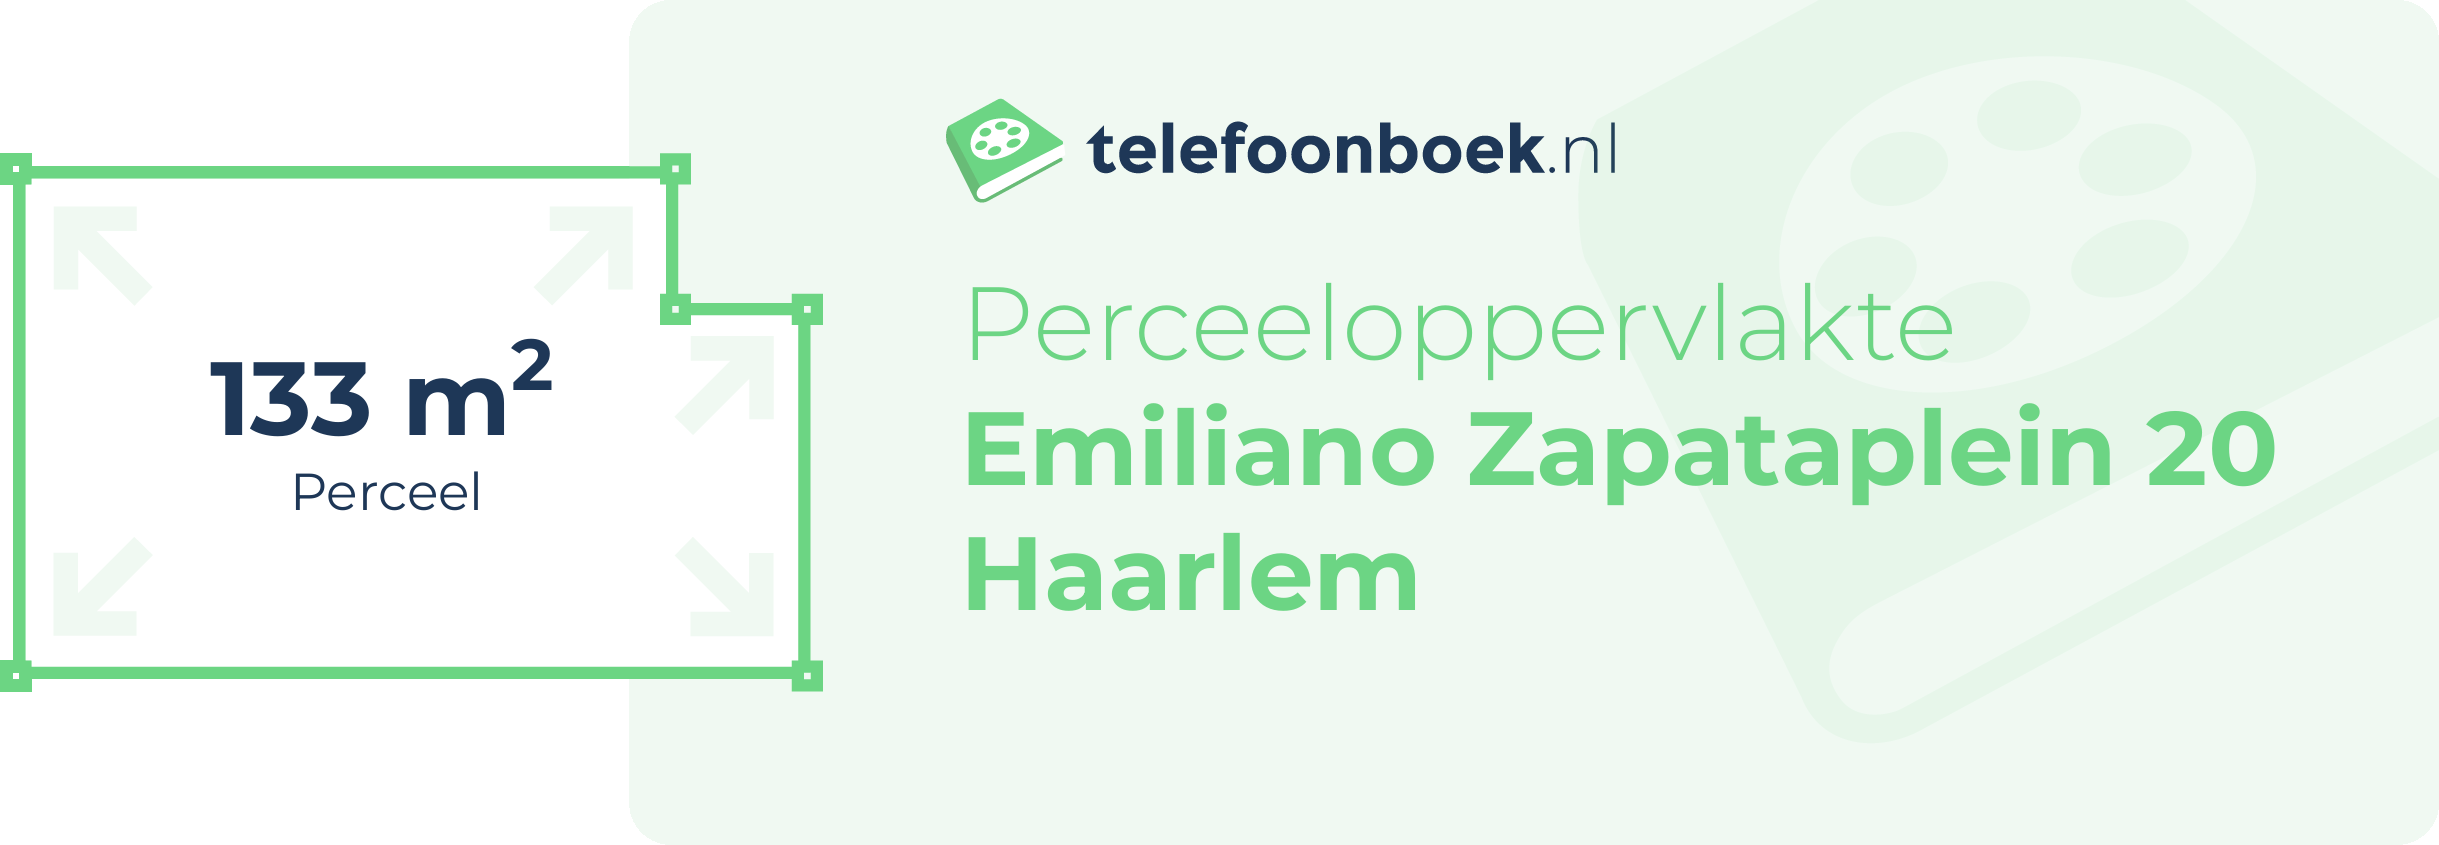 Perceeloppervlakte Emiliano Zapataplein 20 Haarlem